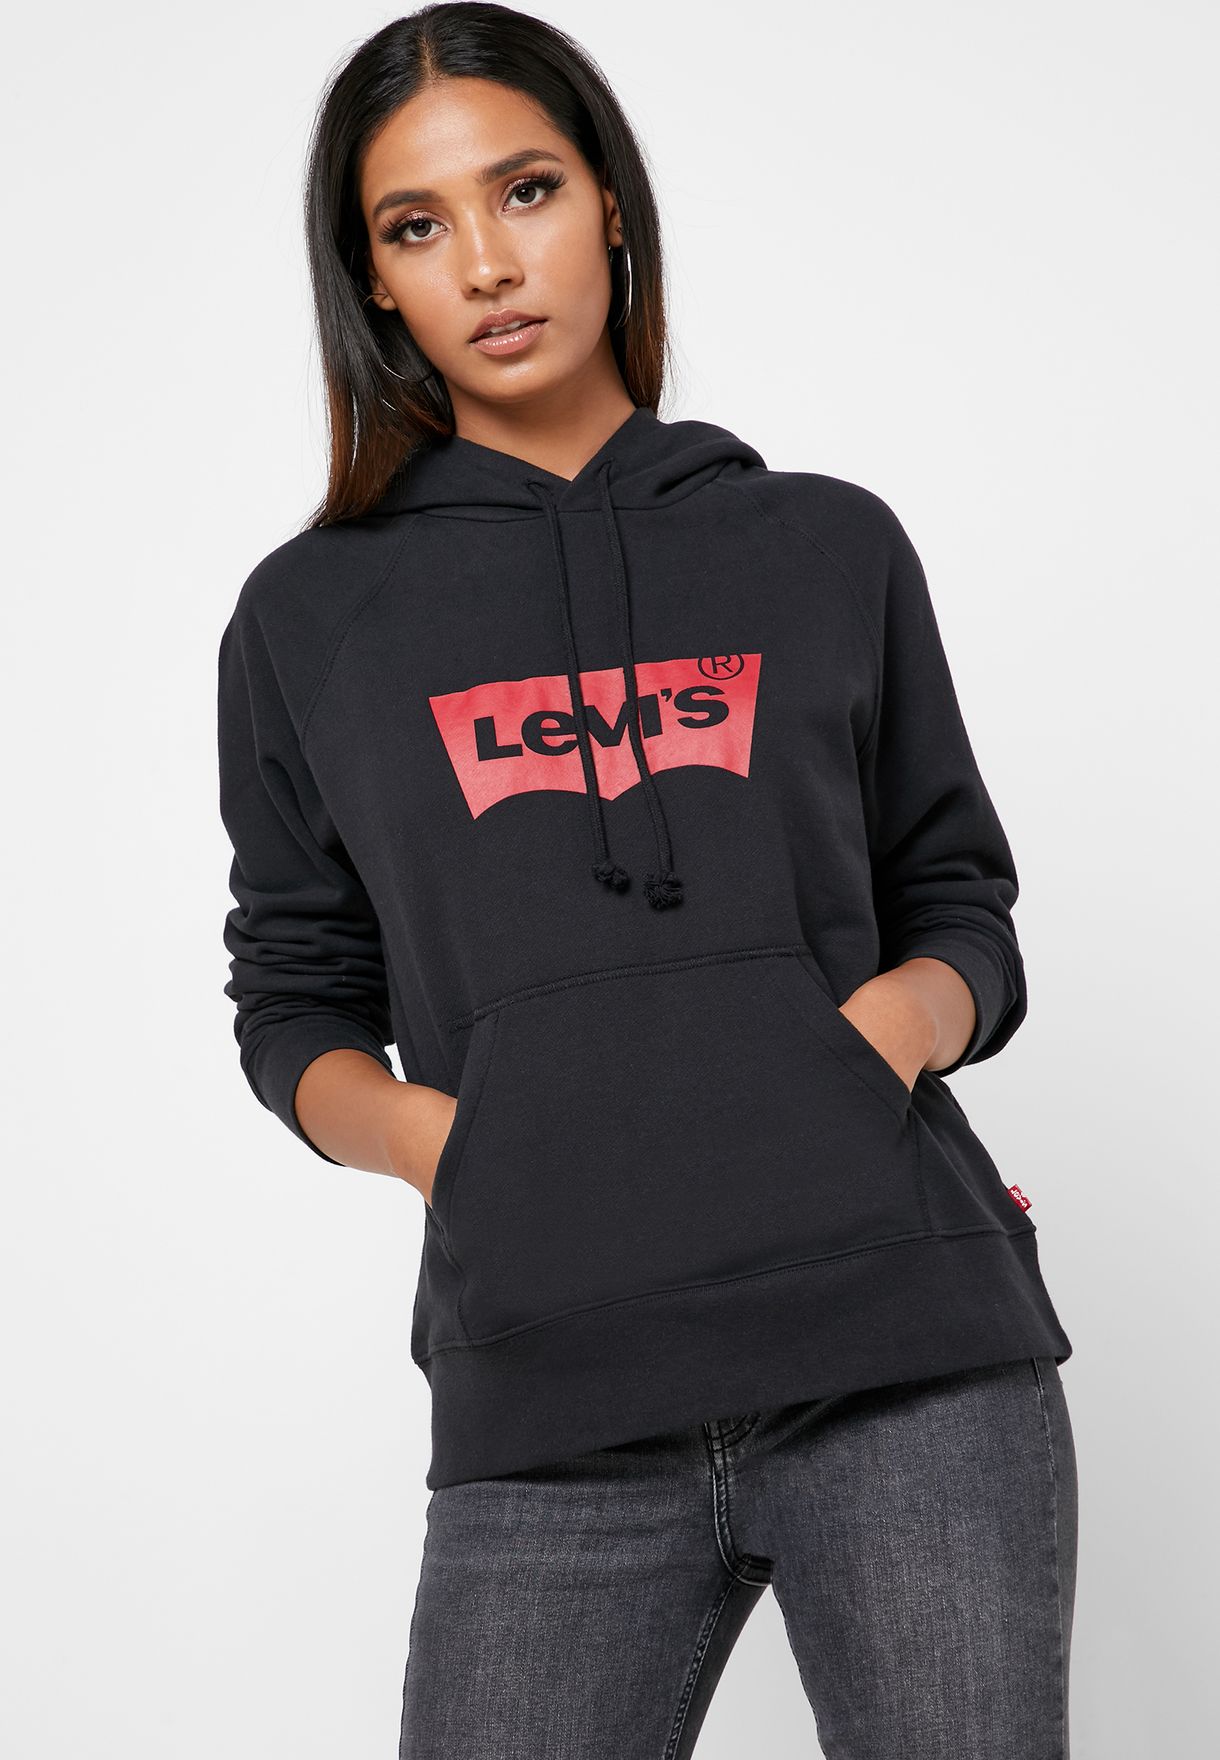 levis hoodie grey womens Shop Clothing 